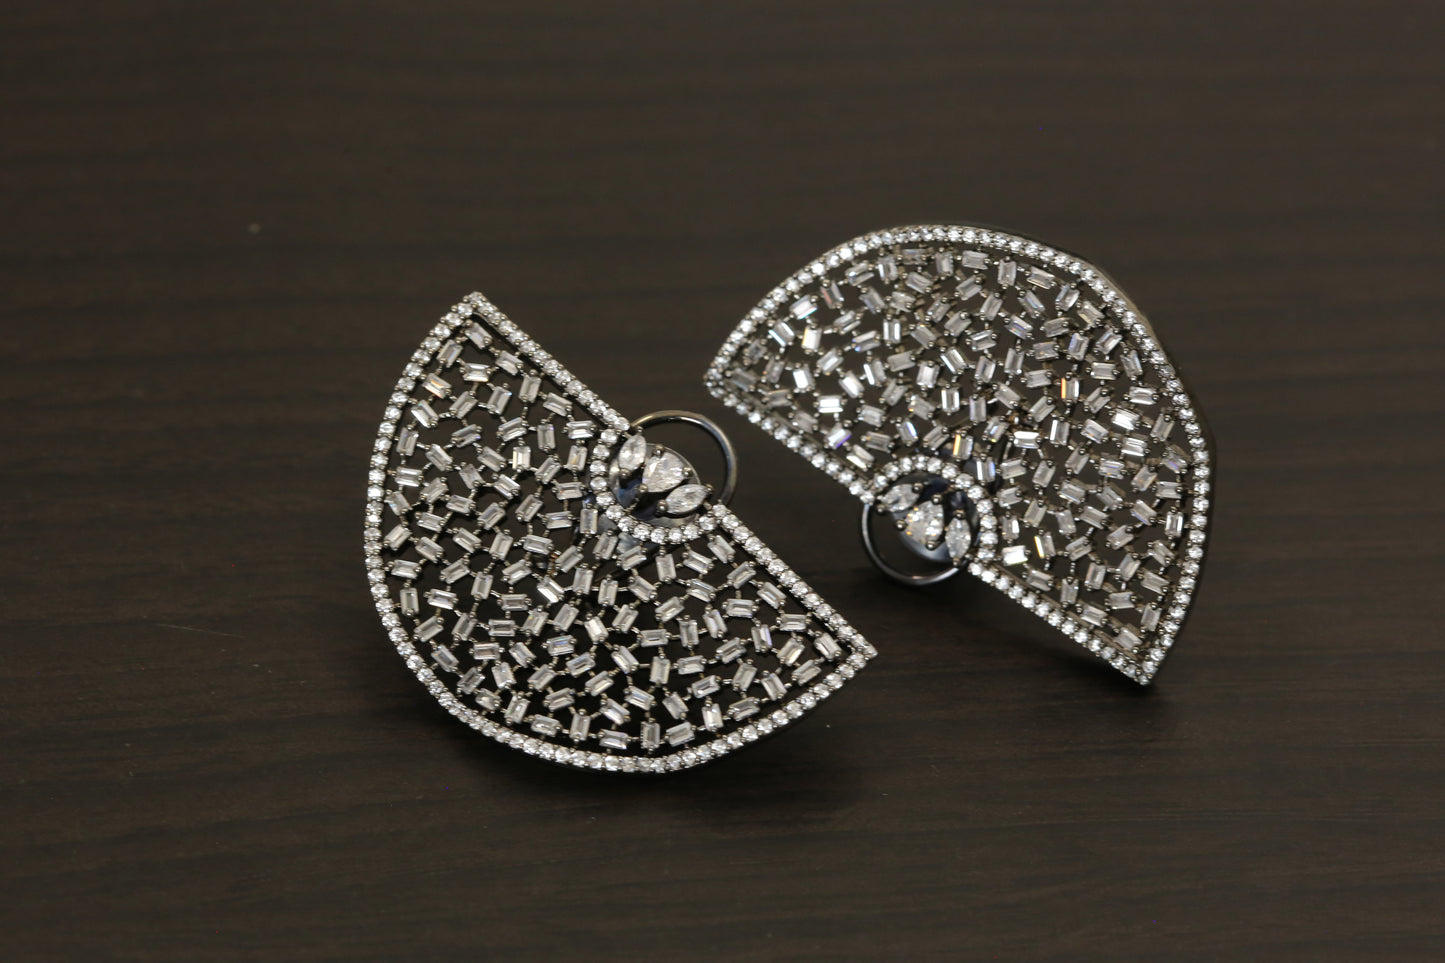 Suhasini Chand CZ Earrings - Oxidized